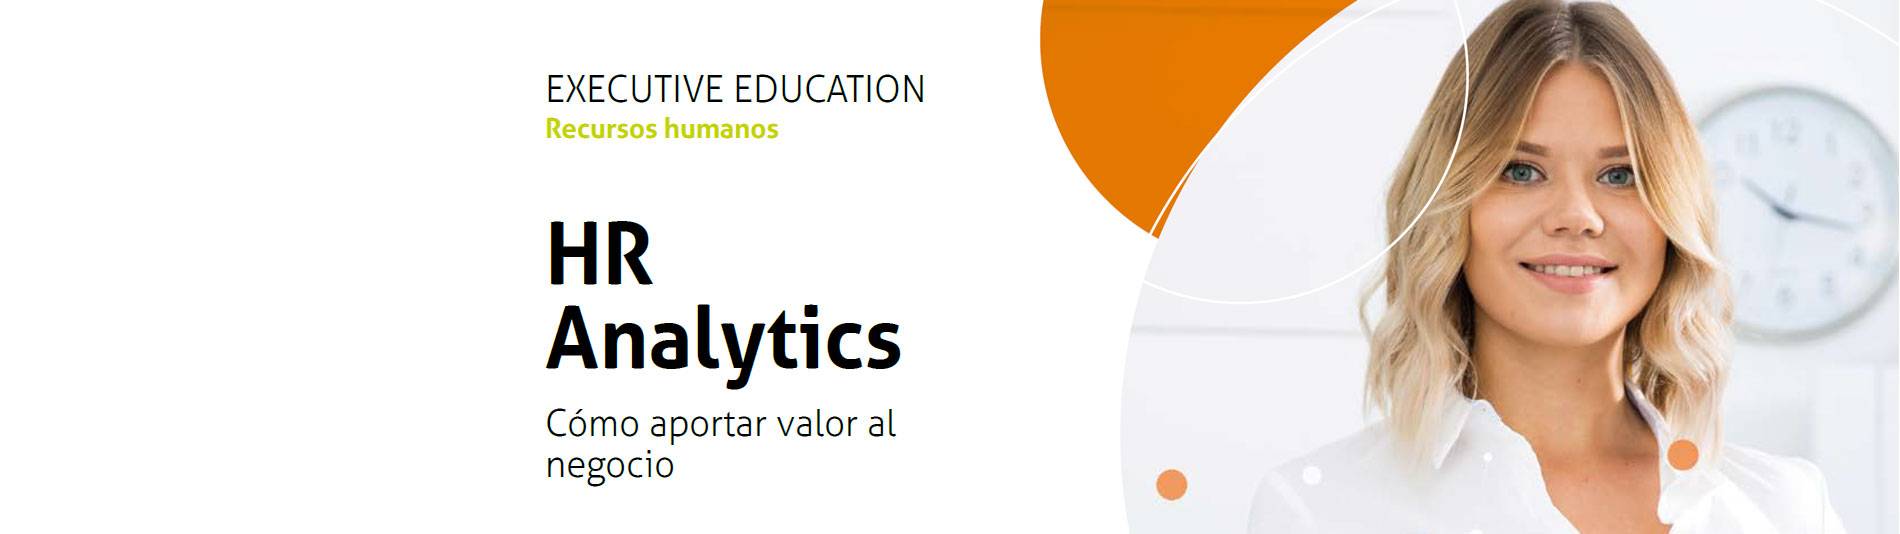 HR Analytics Curso Barcelona